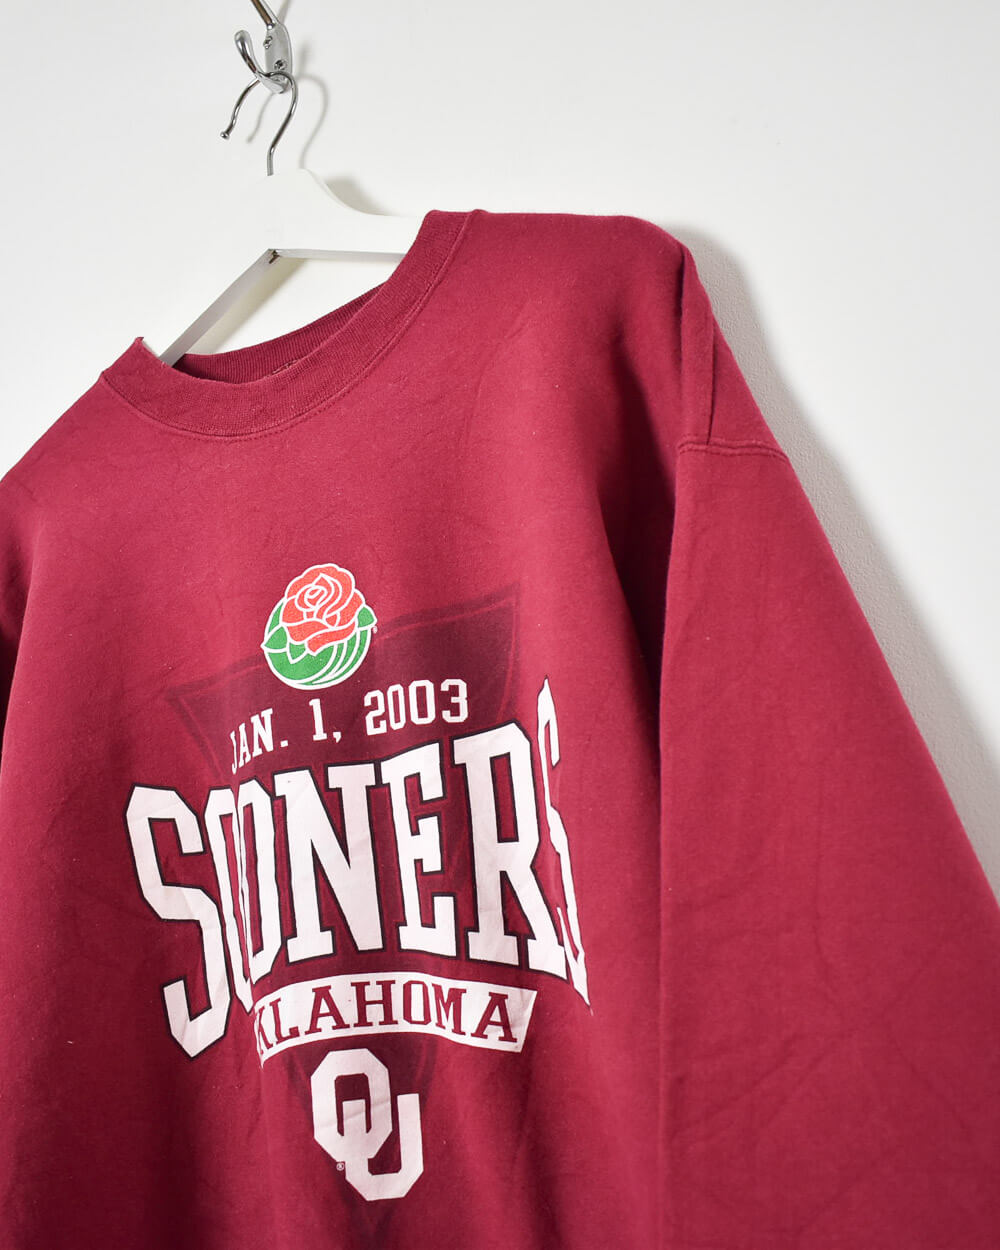 Hanes Sooners Oklahoma Football 2003 Sweatshirt - Medium - Domno Vintage 90s, 80s, 00s Retro and Vintage Clothing 